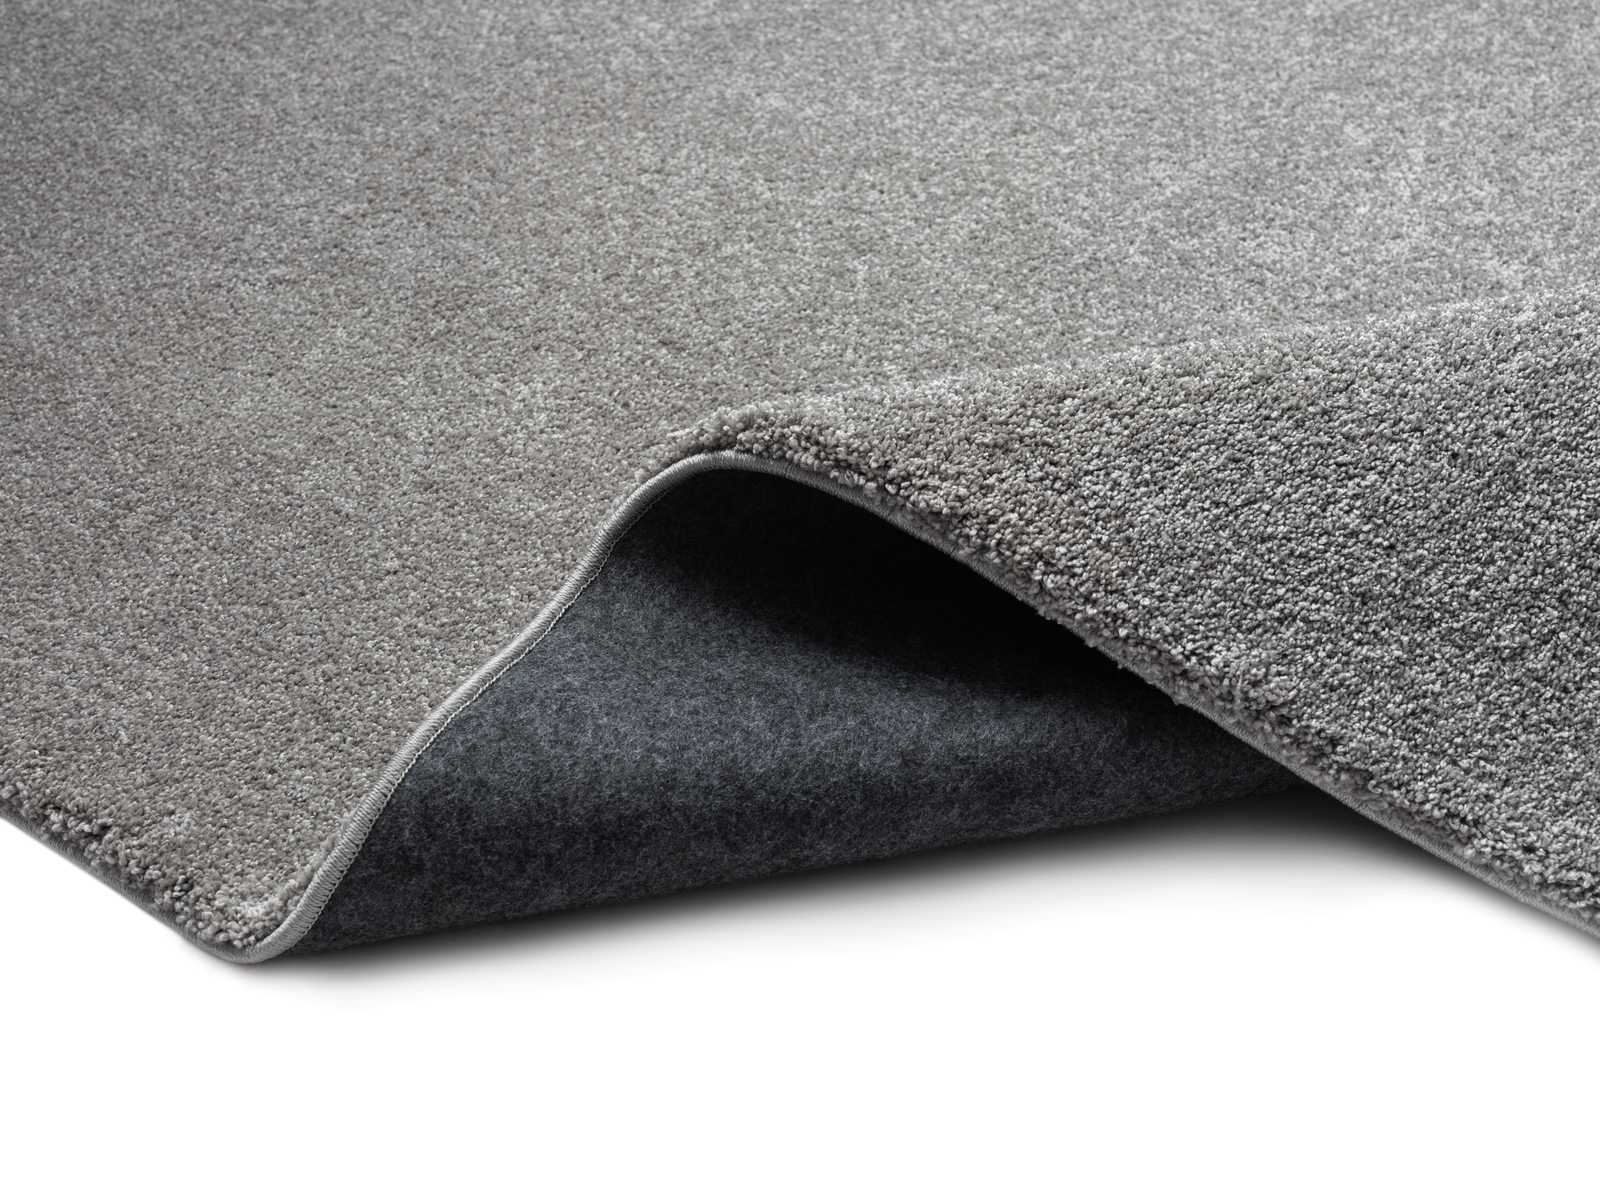             Fluffy short pile carpet in grey - 200 x 140 cm
        